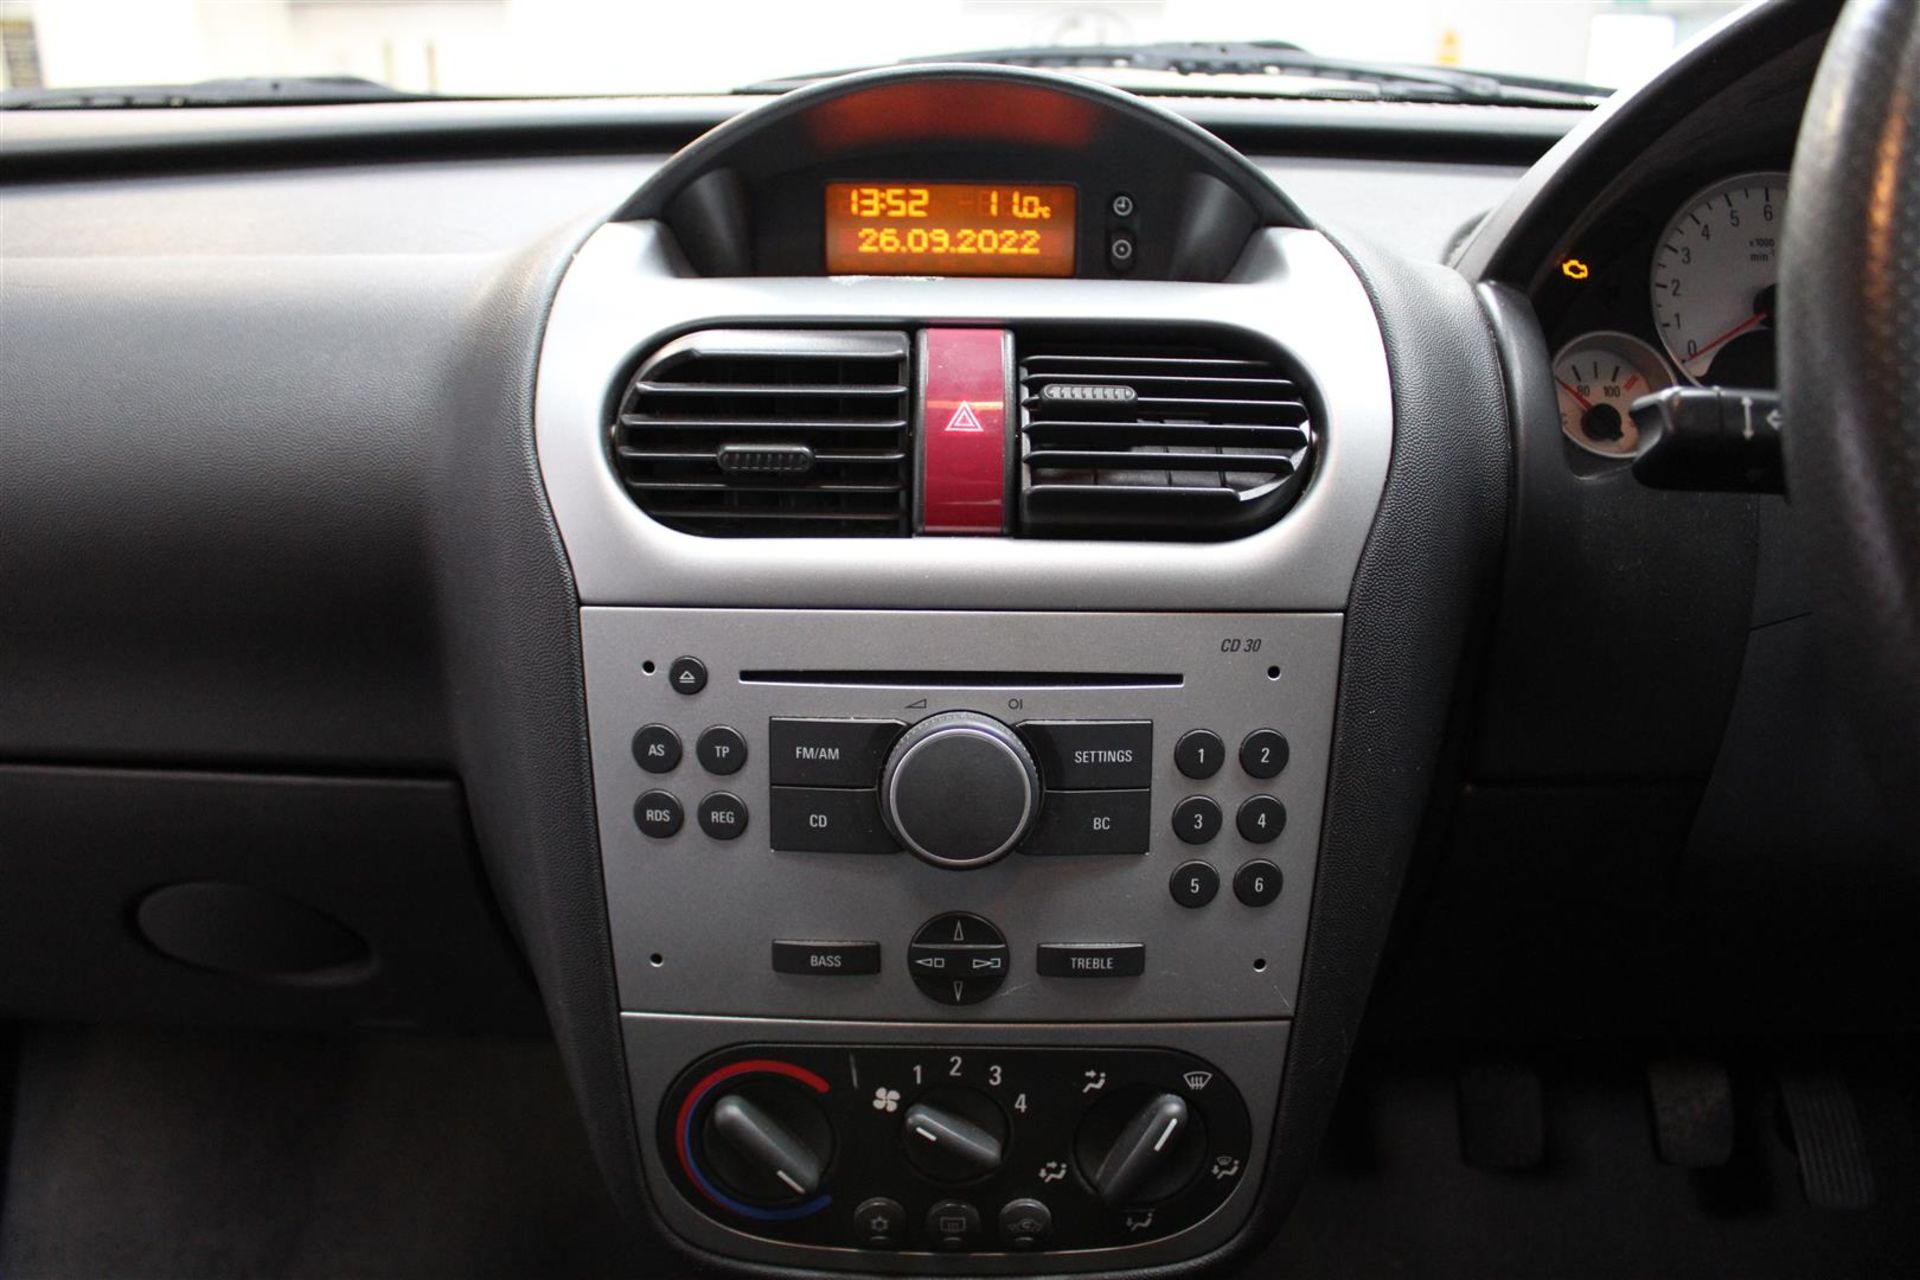 06 06 Vauxhall Corsa SXI + - Image 11 of 29